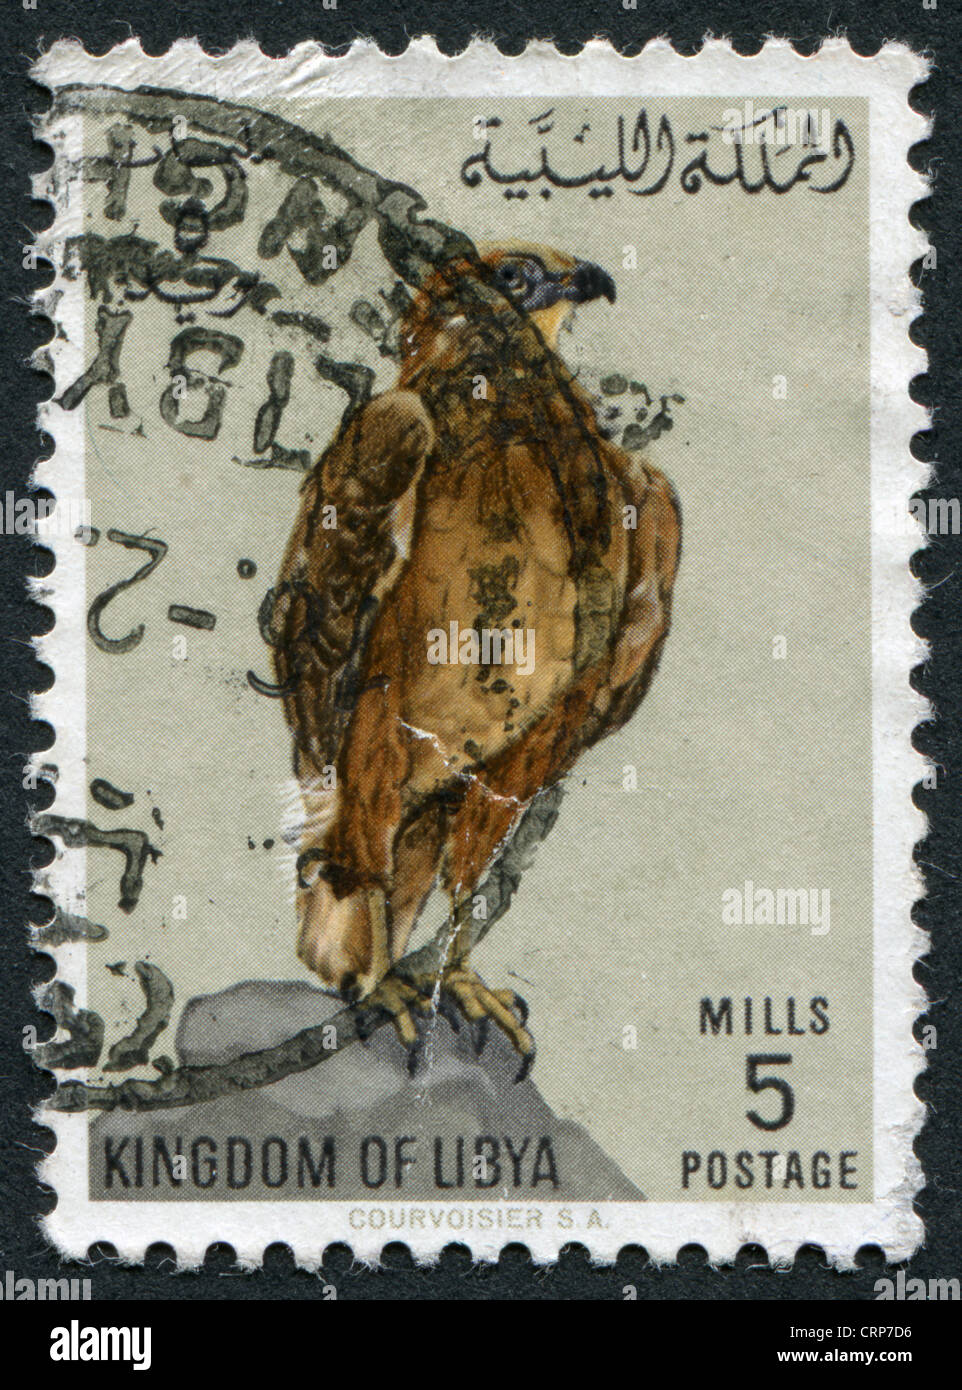 KINGDOM OF LIBYA - CIRCA 1965: Postage stamps printed in Libya, shows a Long-legged Buzzard (Buteo rufinus), circa 1965 Stock Photo